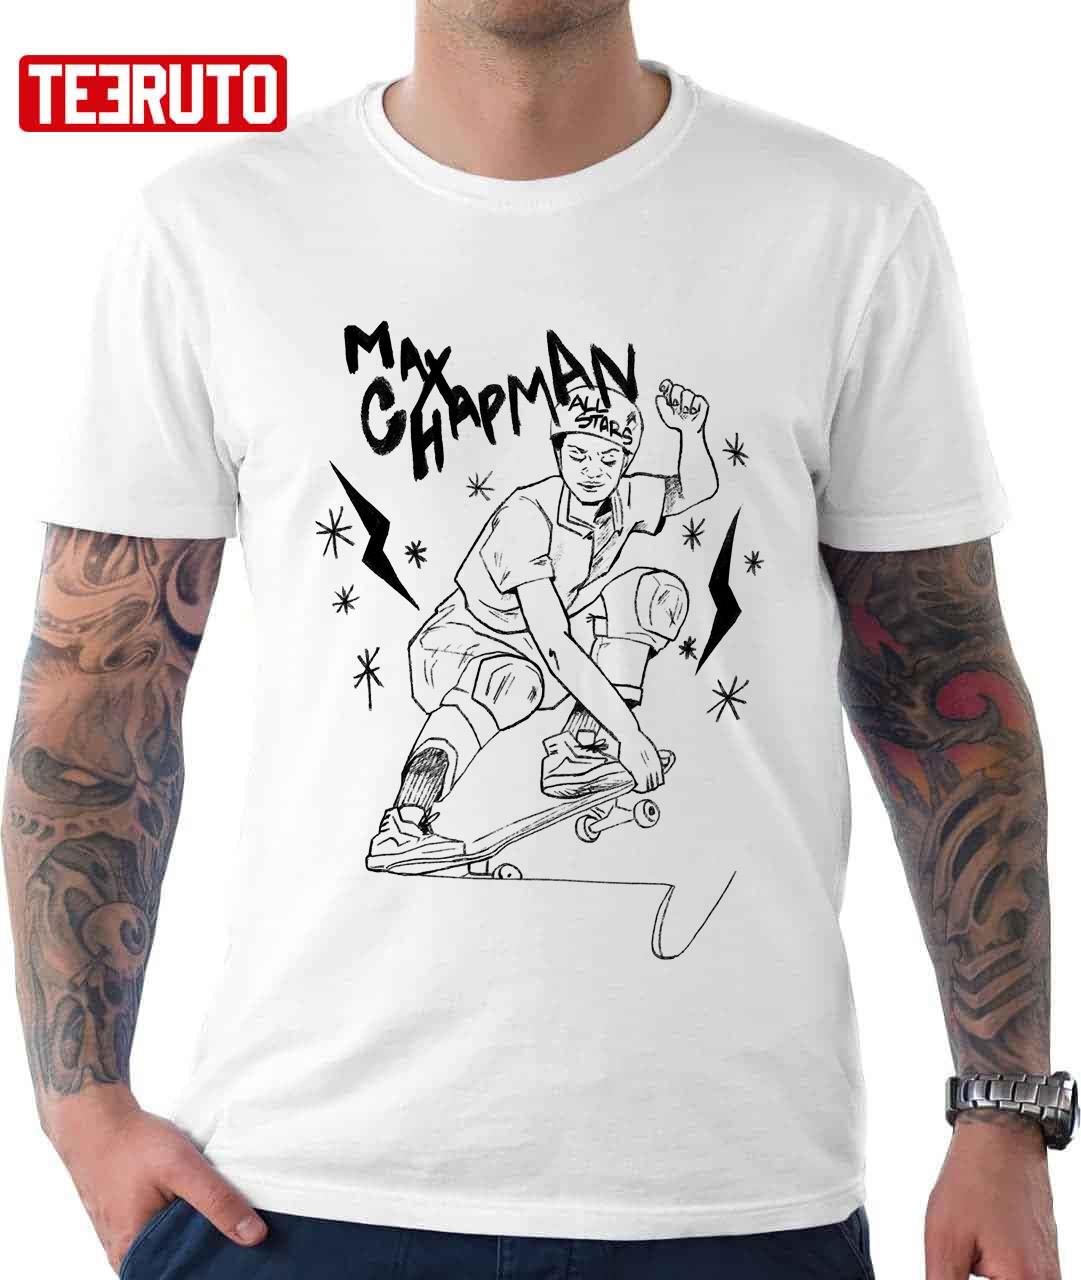 Max Chapman All-Star Skater Unisex T-Shirt